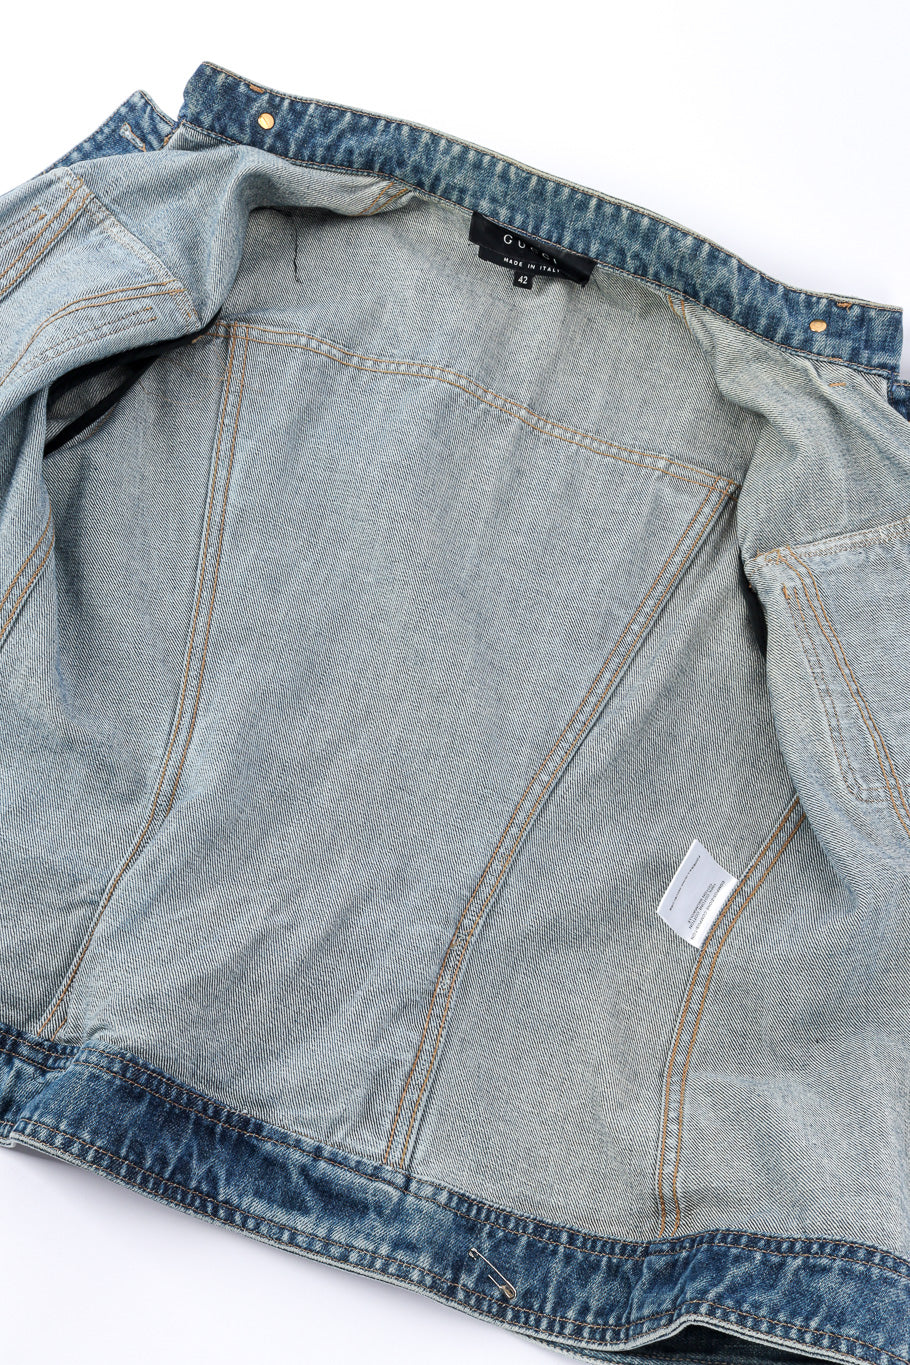 Bamboo Belt Denim Jacket by Gucci lining open @recessla